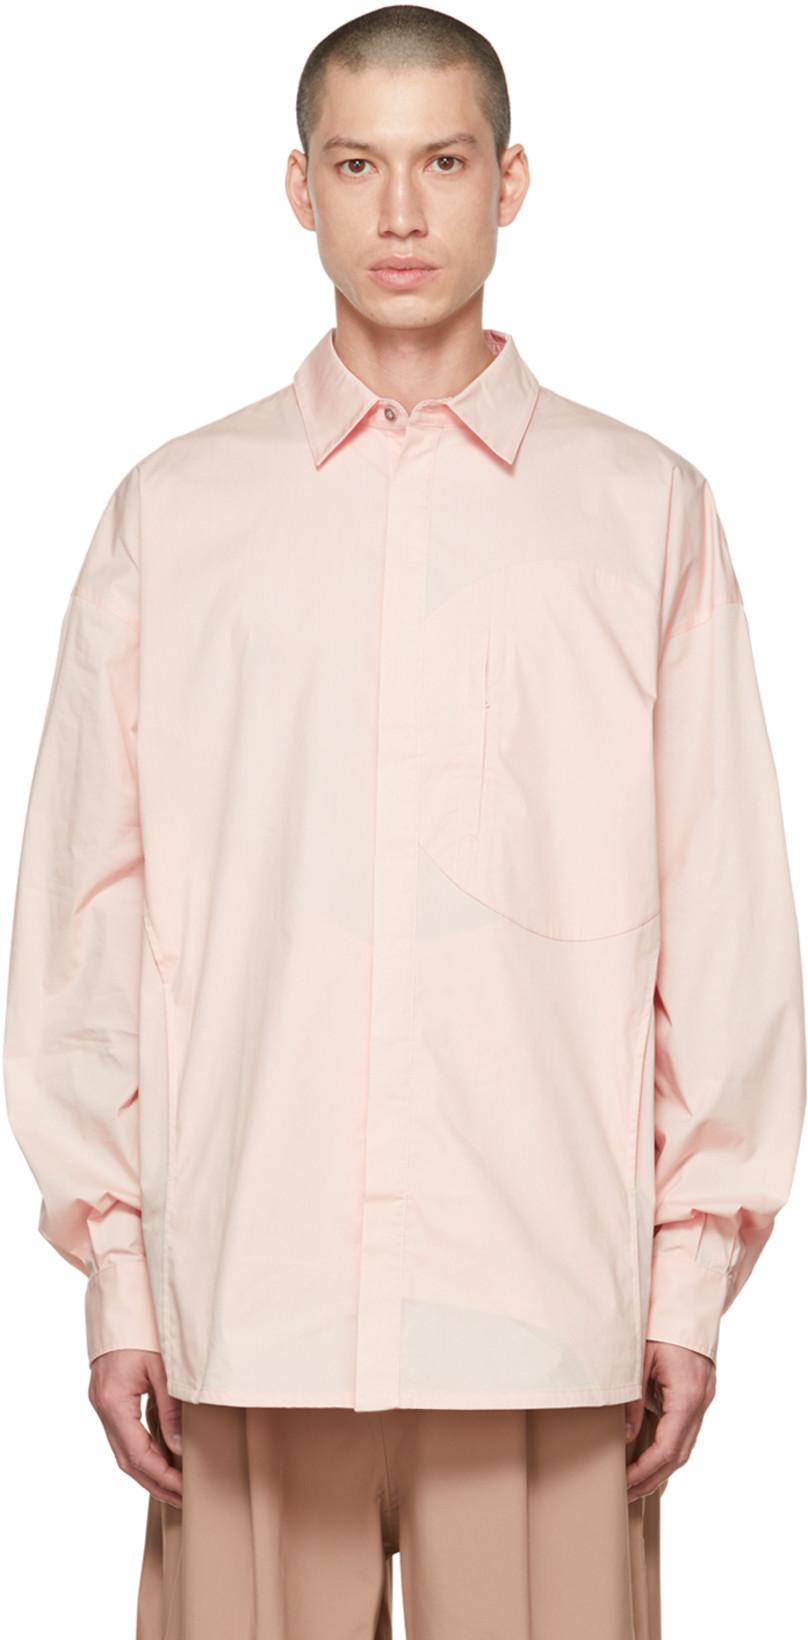 Pink Cyrilic Shirt by A. A. SPECTRUM